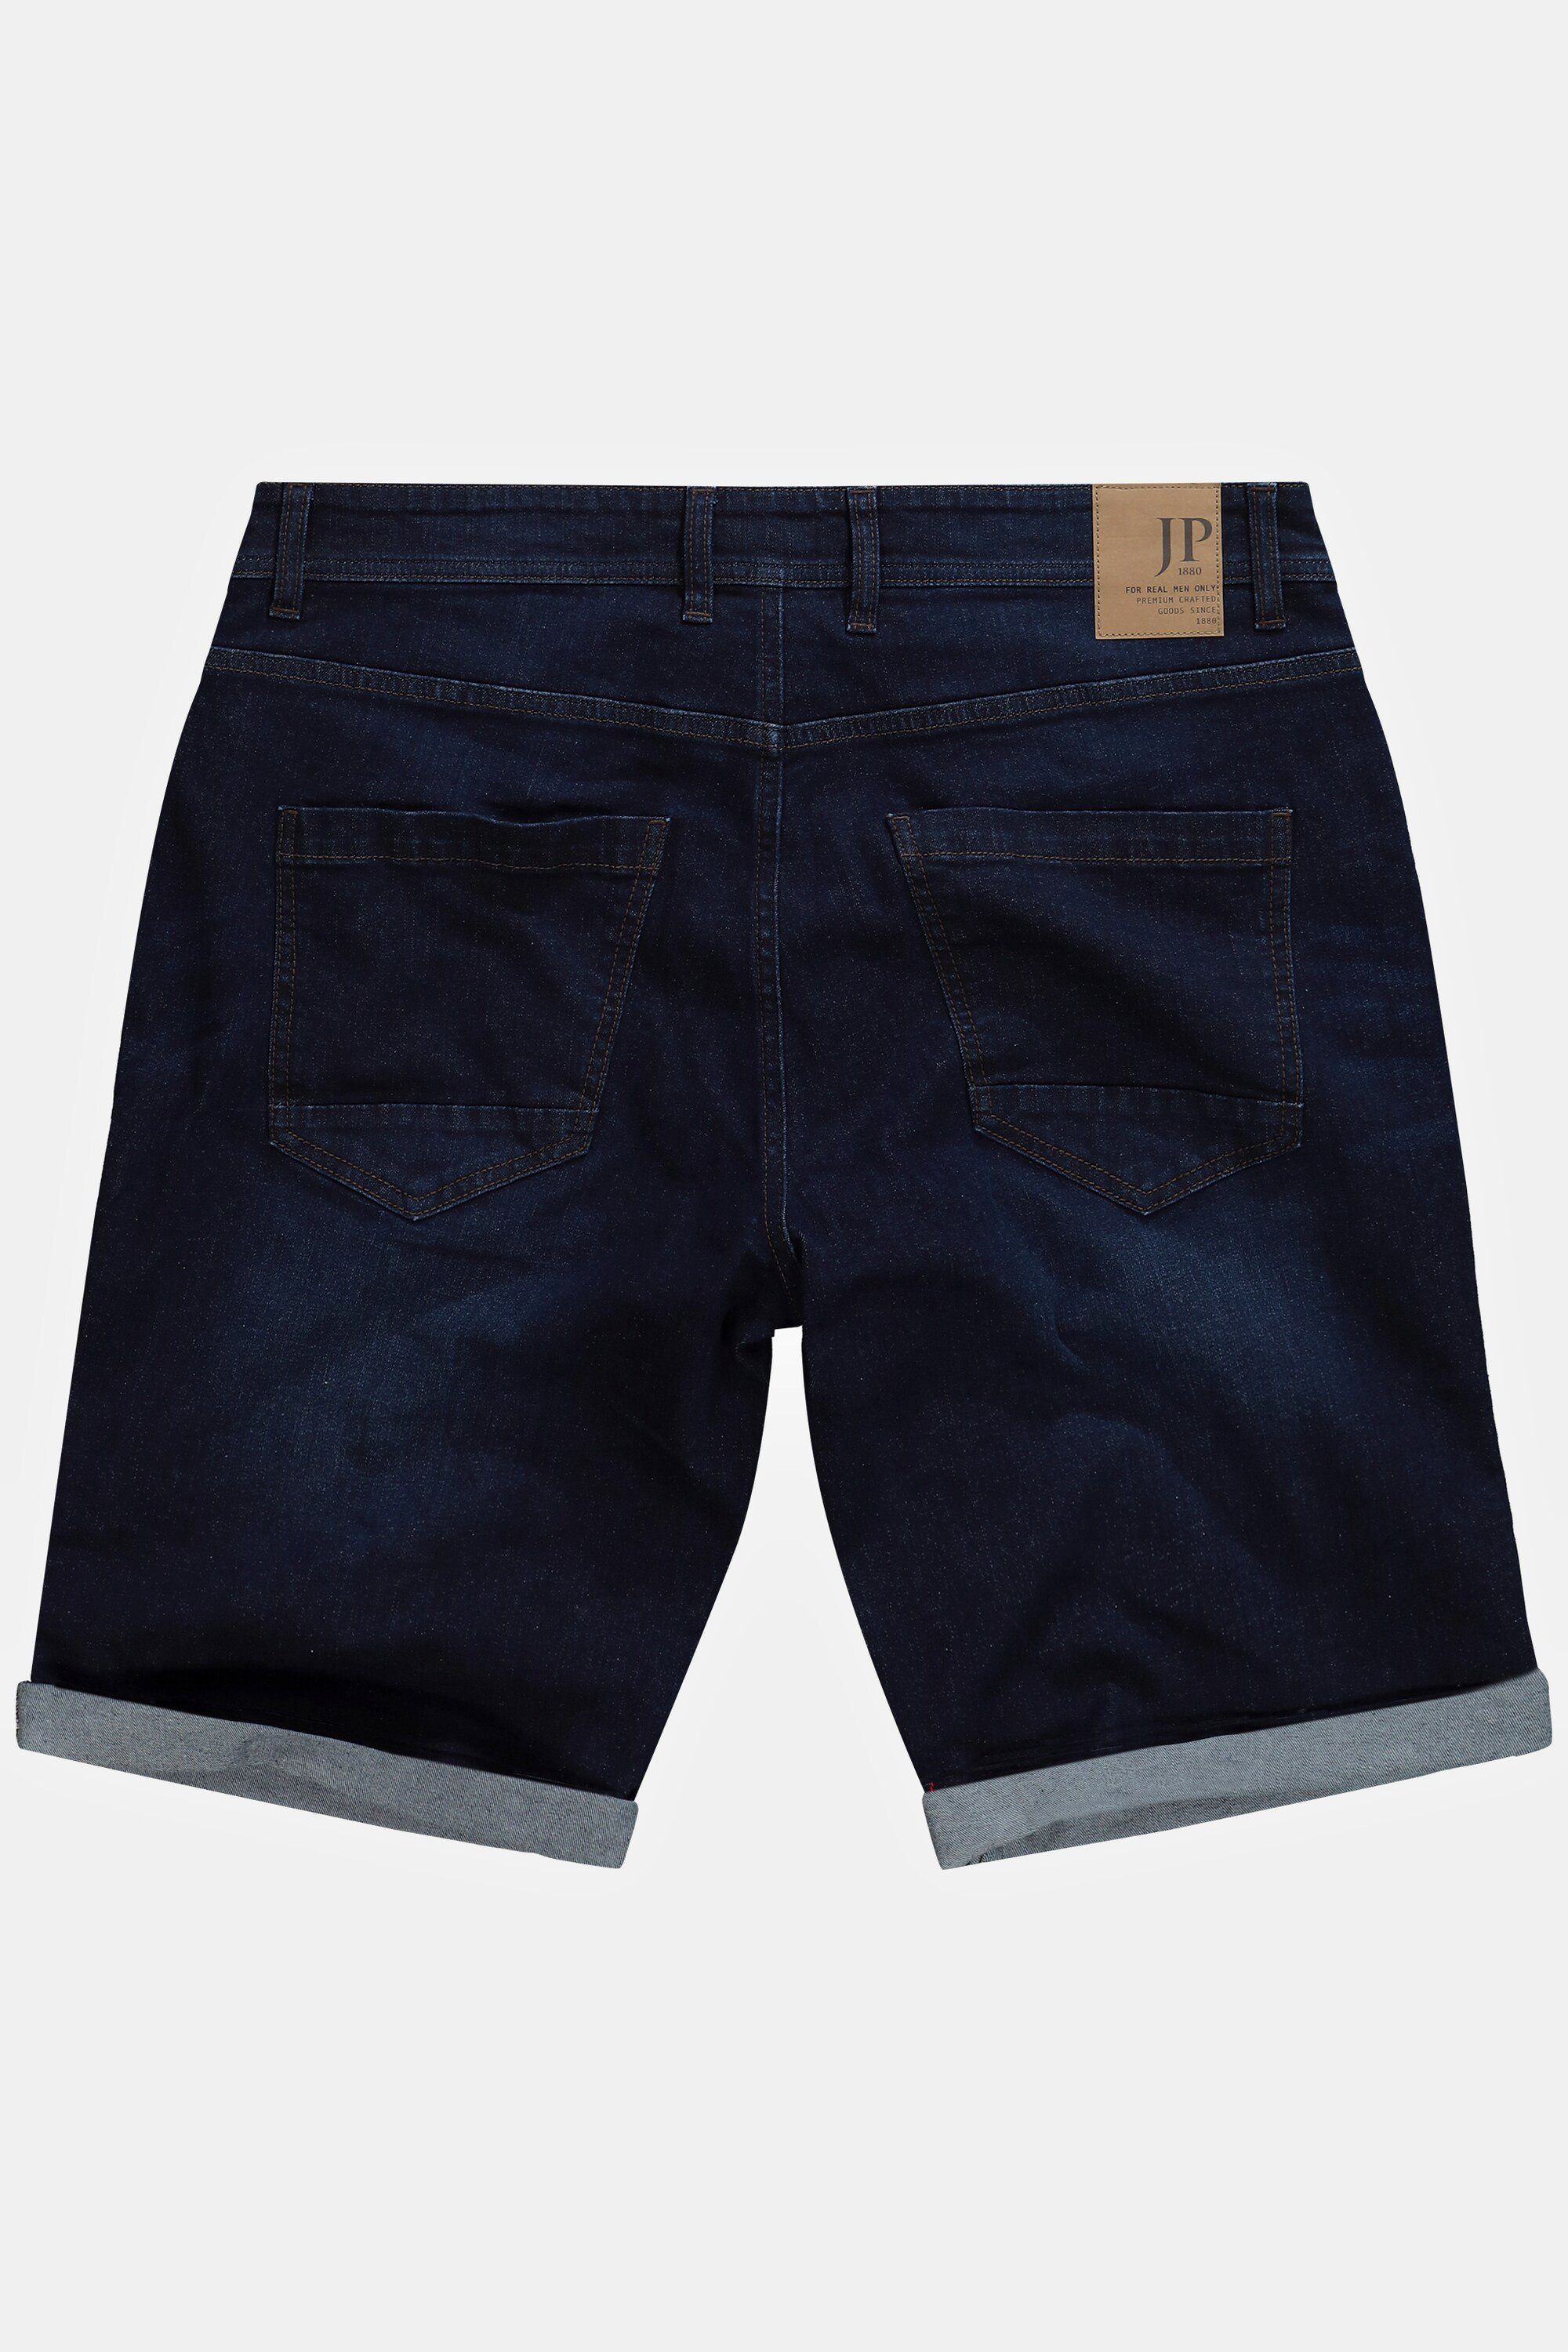 Jeans Jeansbermudas High-Stretch Bauchfit dark blue 5-Pocket JP1880 denim Bermuda